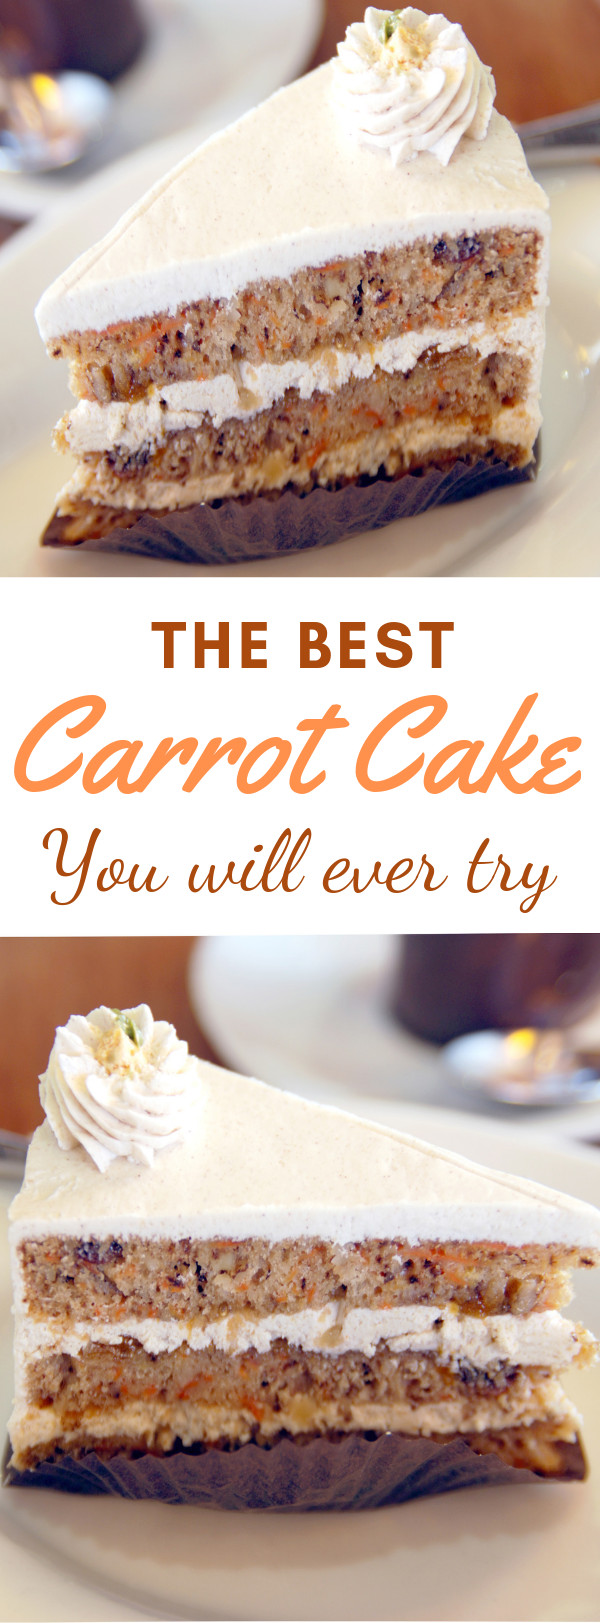 Gourmet Carrot Cake Recipes
 The Best Carrot Cake Recipe